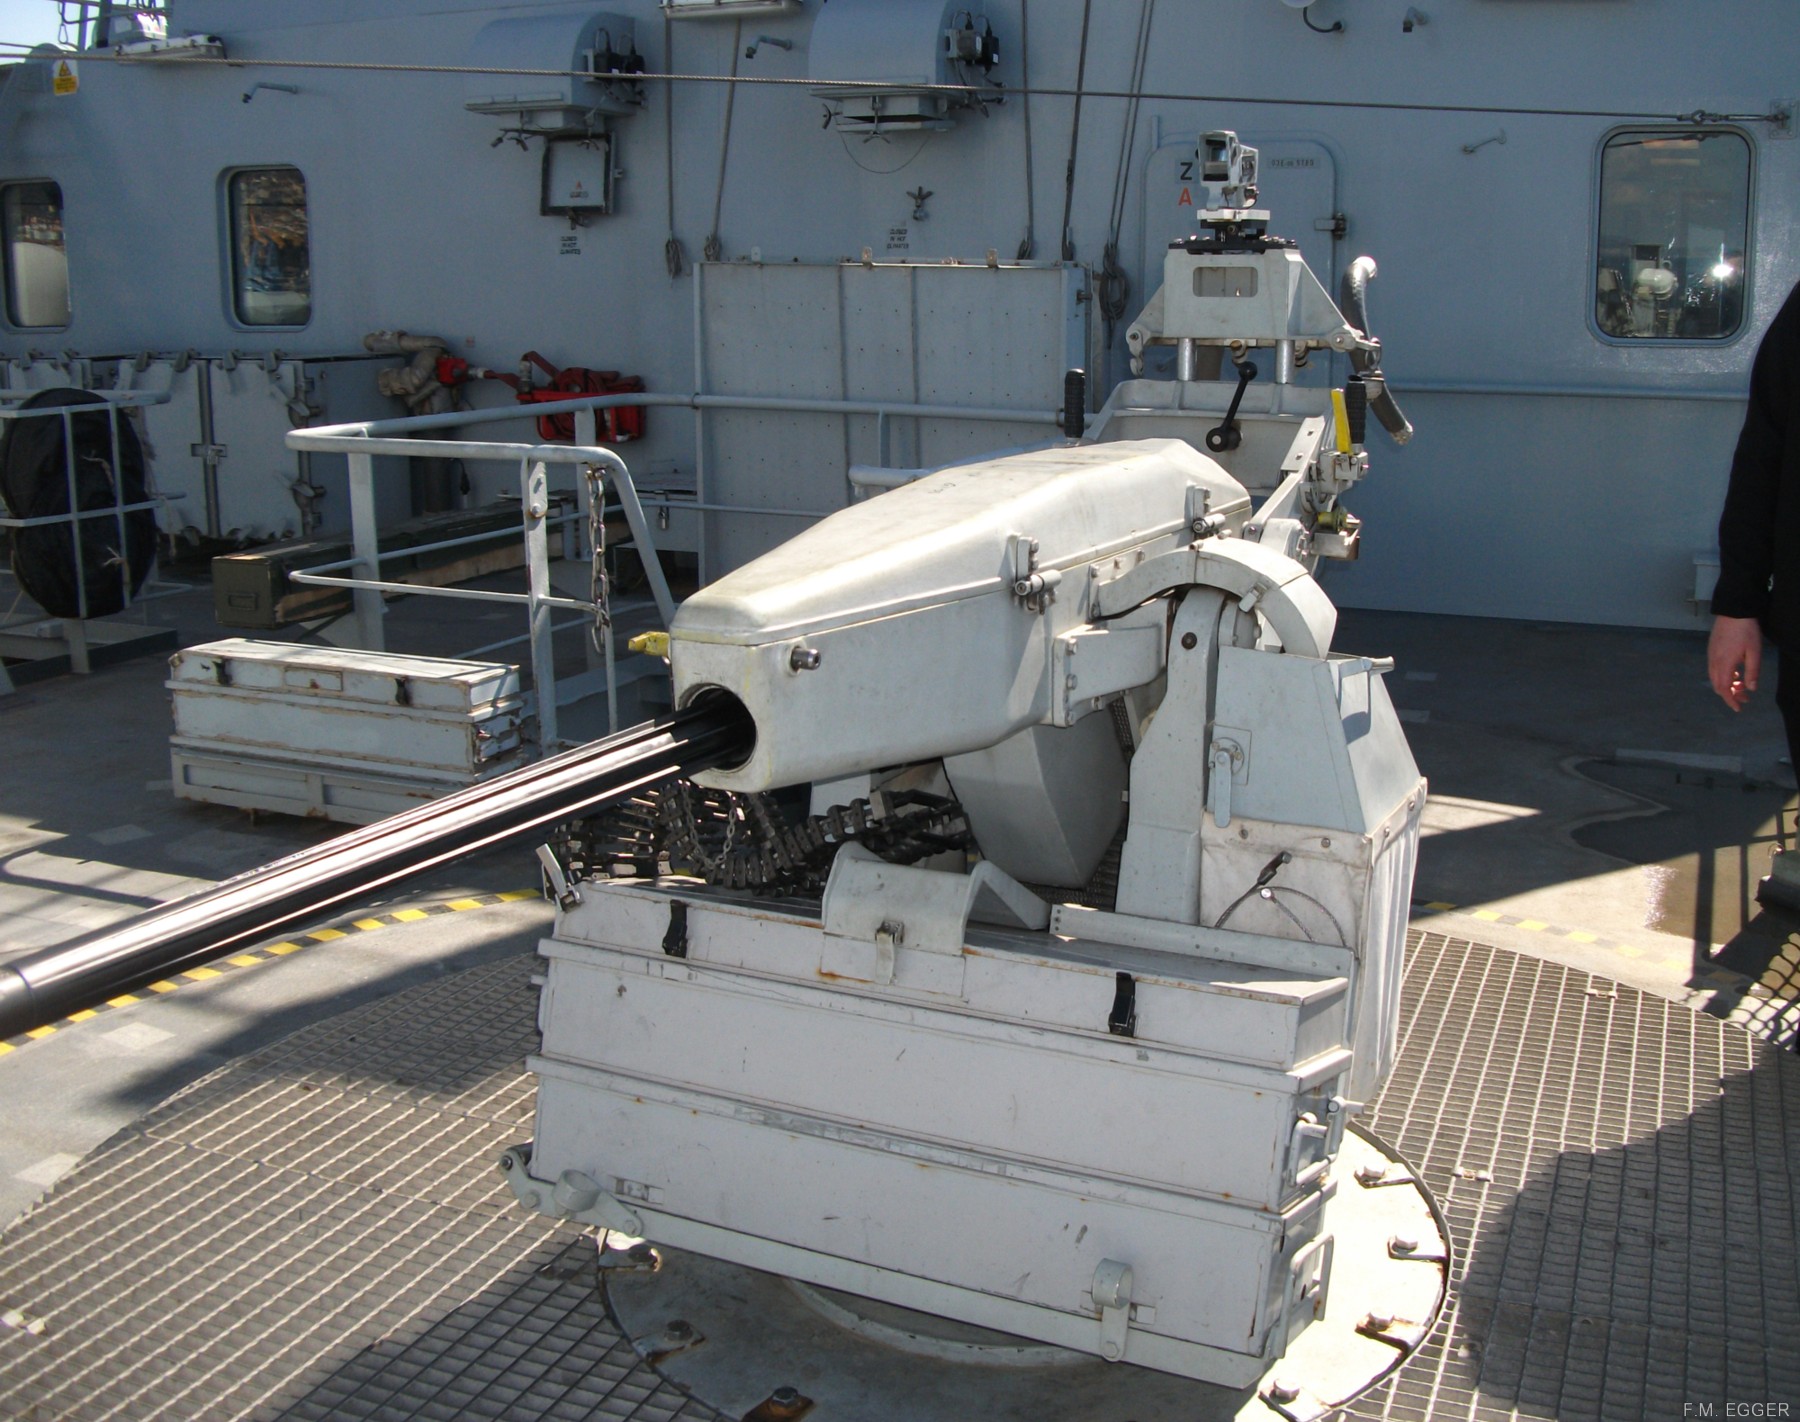 oerlikon 20mm/85 kaa machine gun system autocannon gam-bo1 royal navy 08